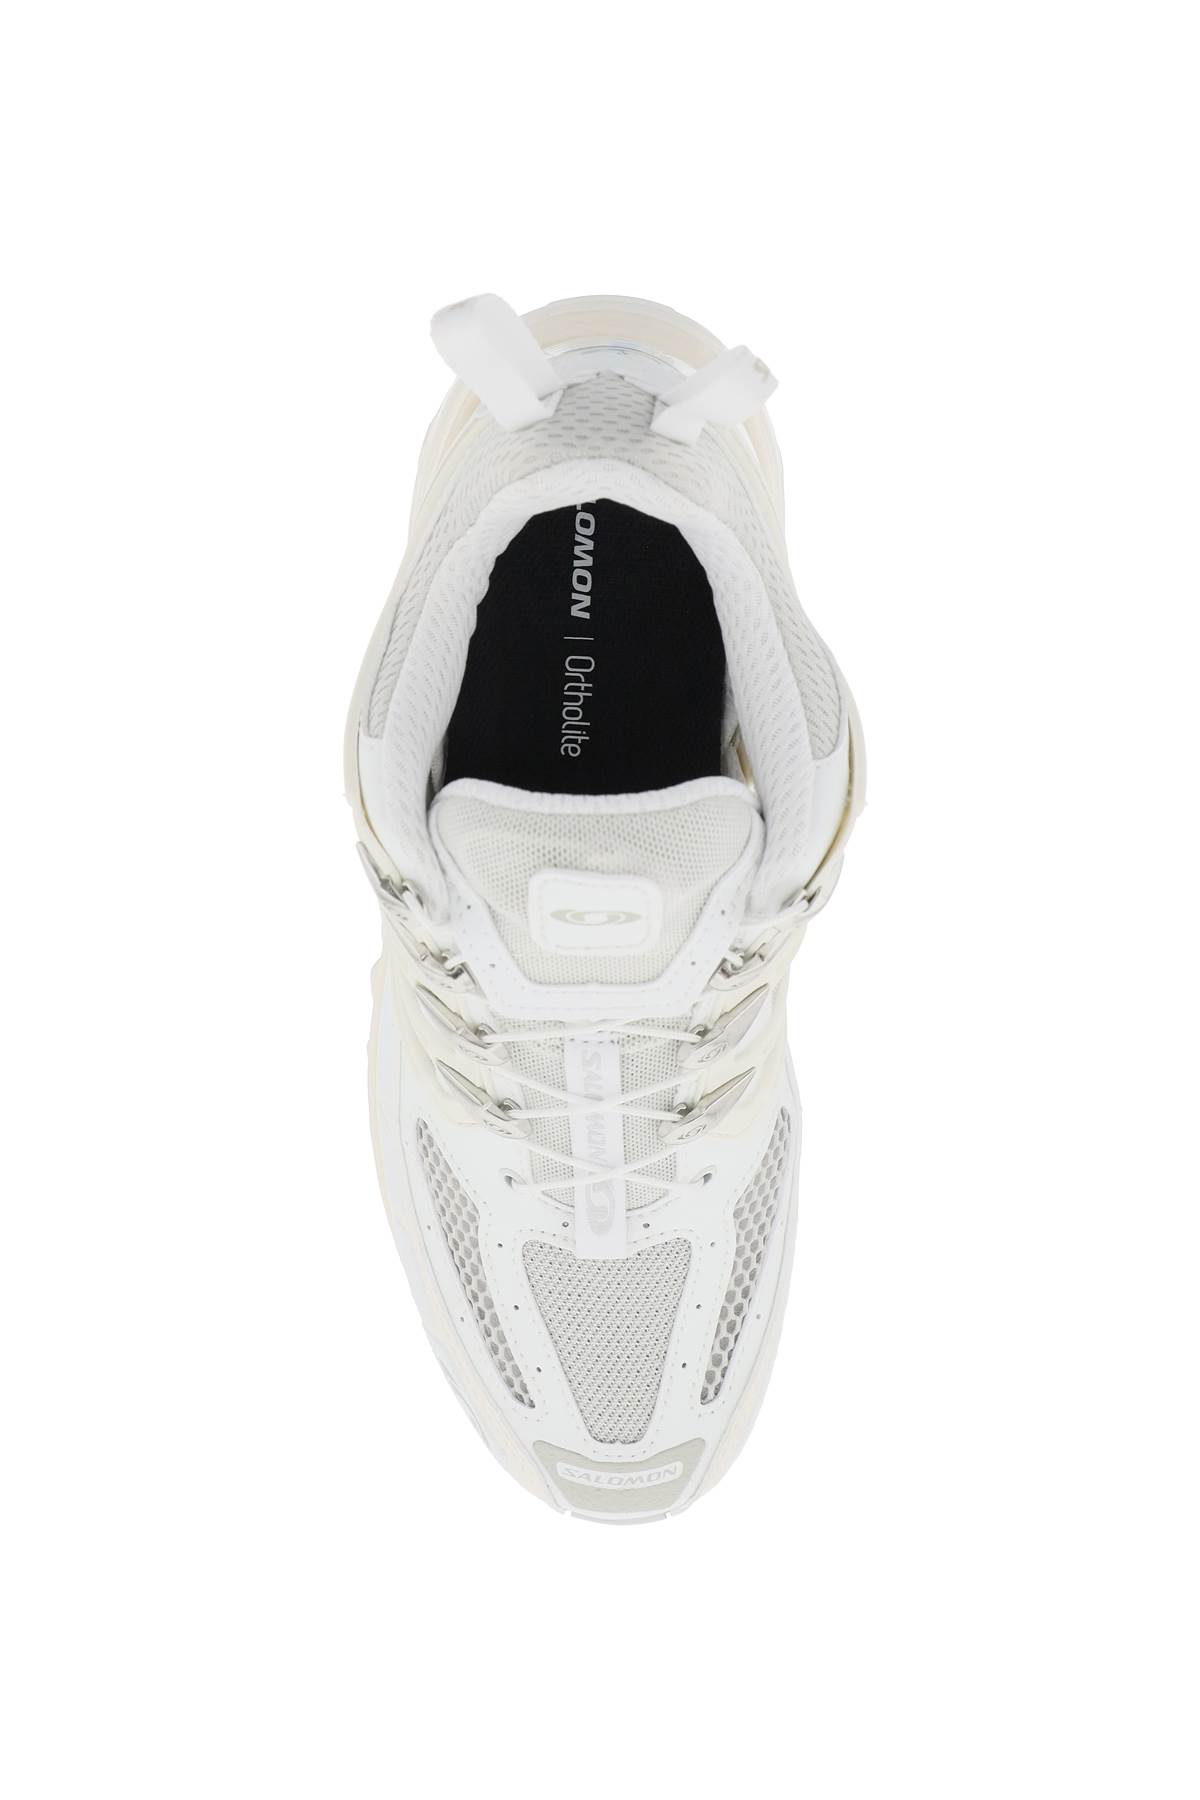 Shop Salomon Acs Pro Sneakers In White Vanilla Ice Lunar Rock (white)